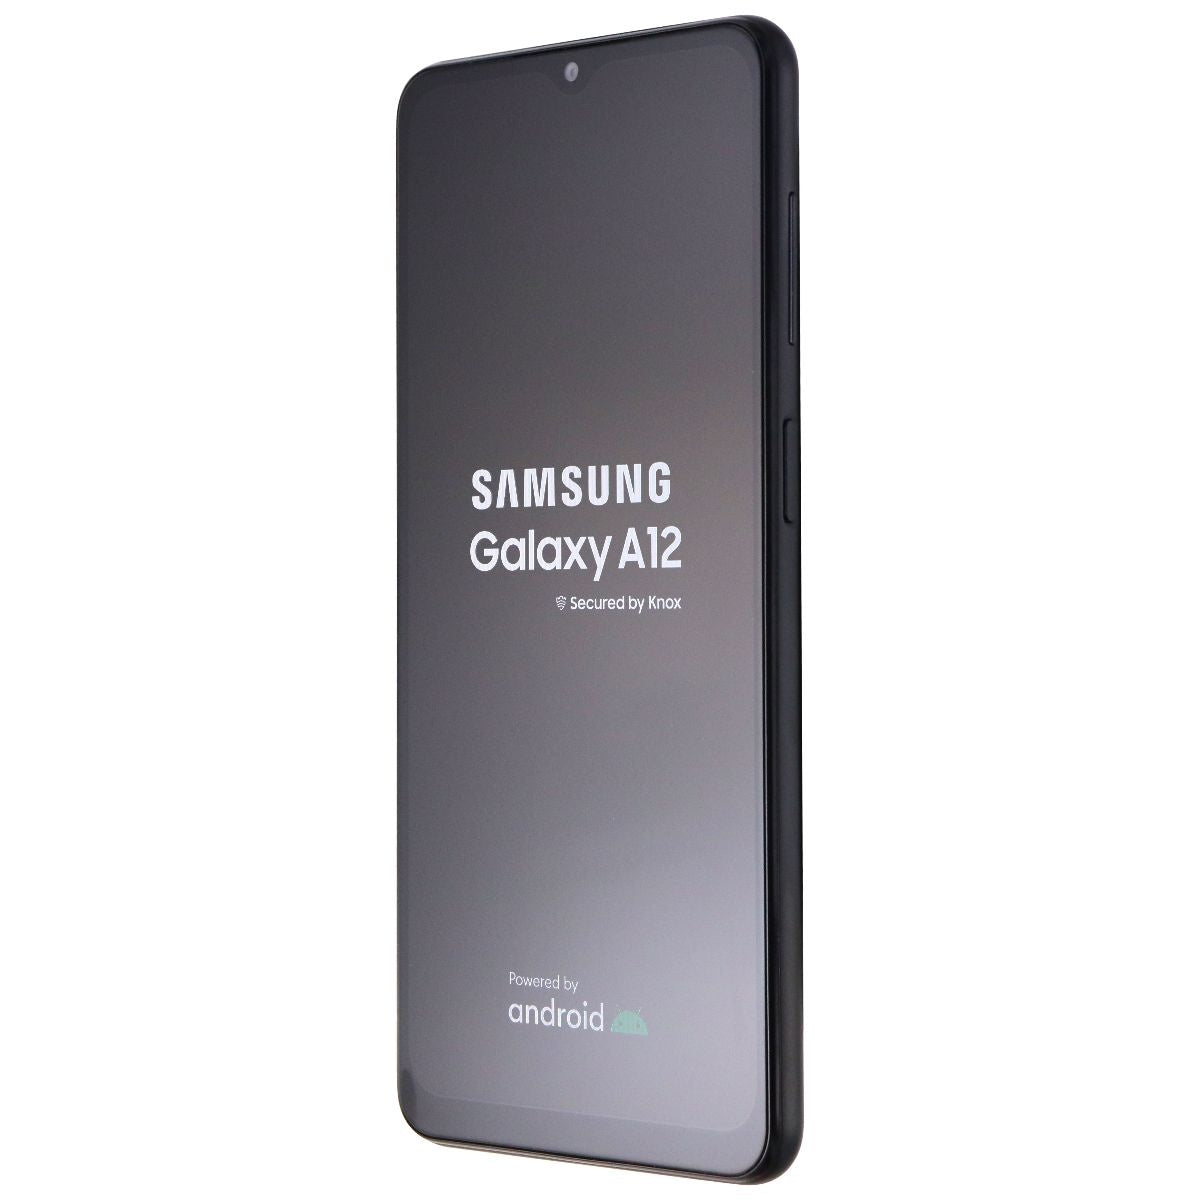 Blind Schouderophalend naar voren gebracht Samsung Galaxy A12 (6.5-inch) (SM-A125U) Metro PCS + T-Mobile - 32GB /